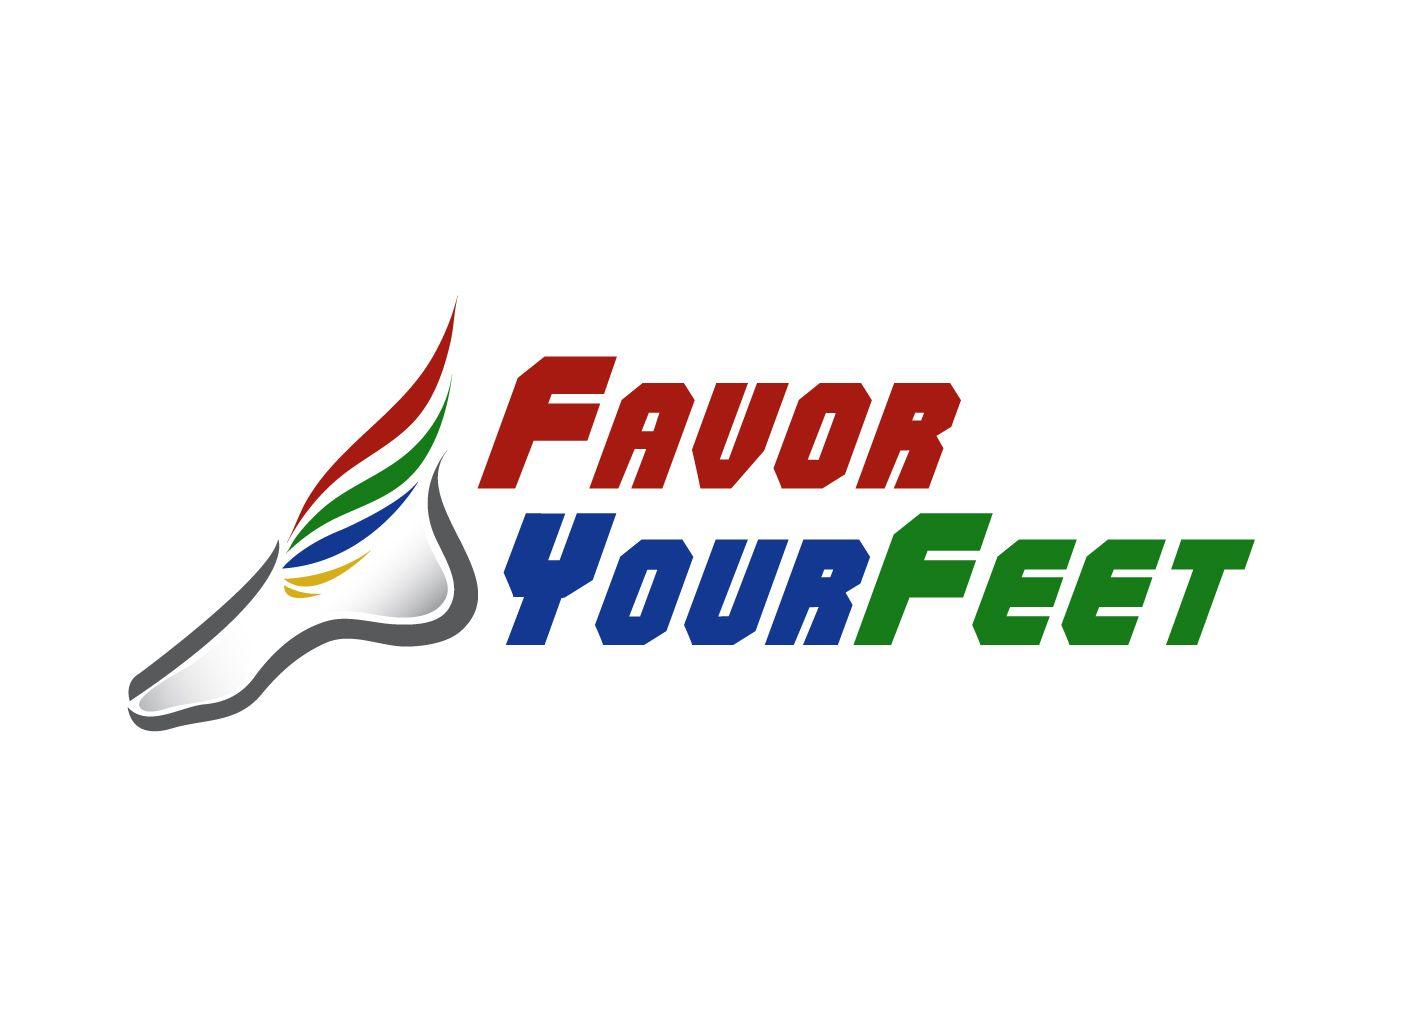 Footwear Company Logo - Bold, Modern, It Company Logo Design for Favor Your Feet by hih7 ...